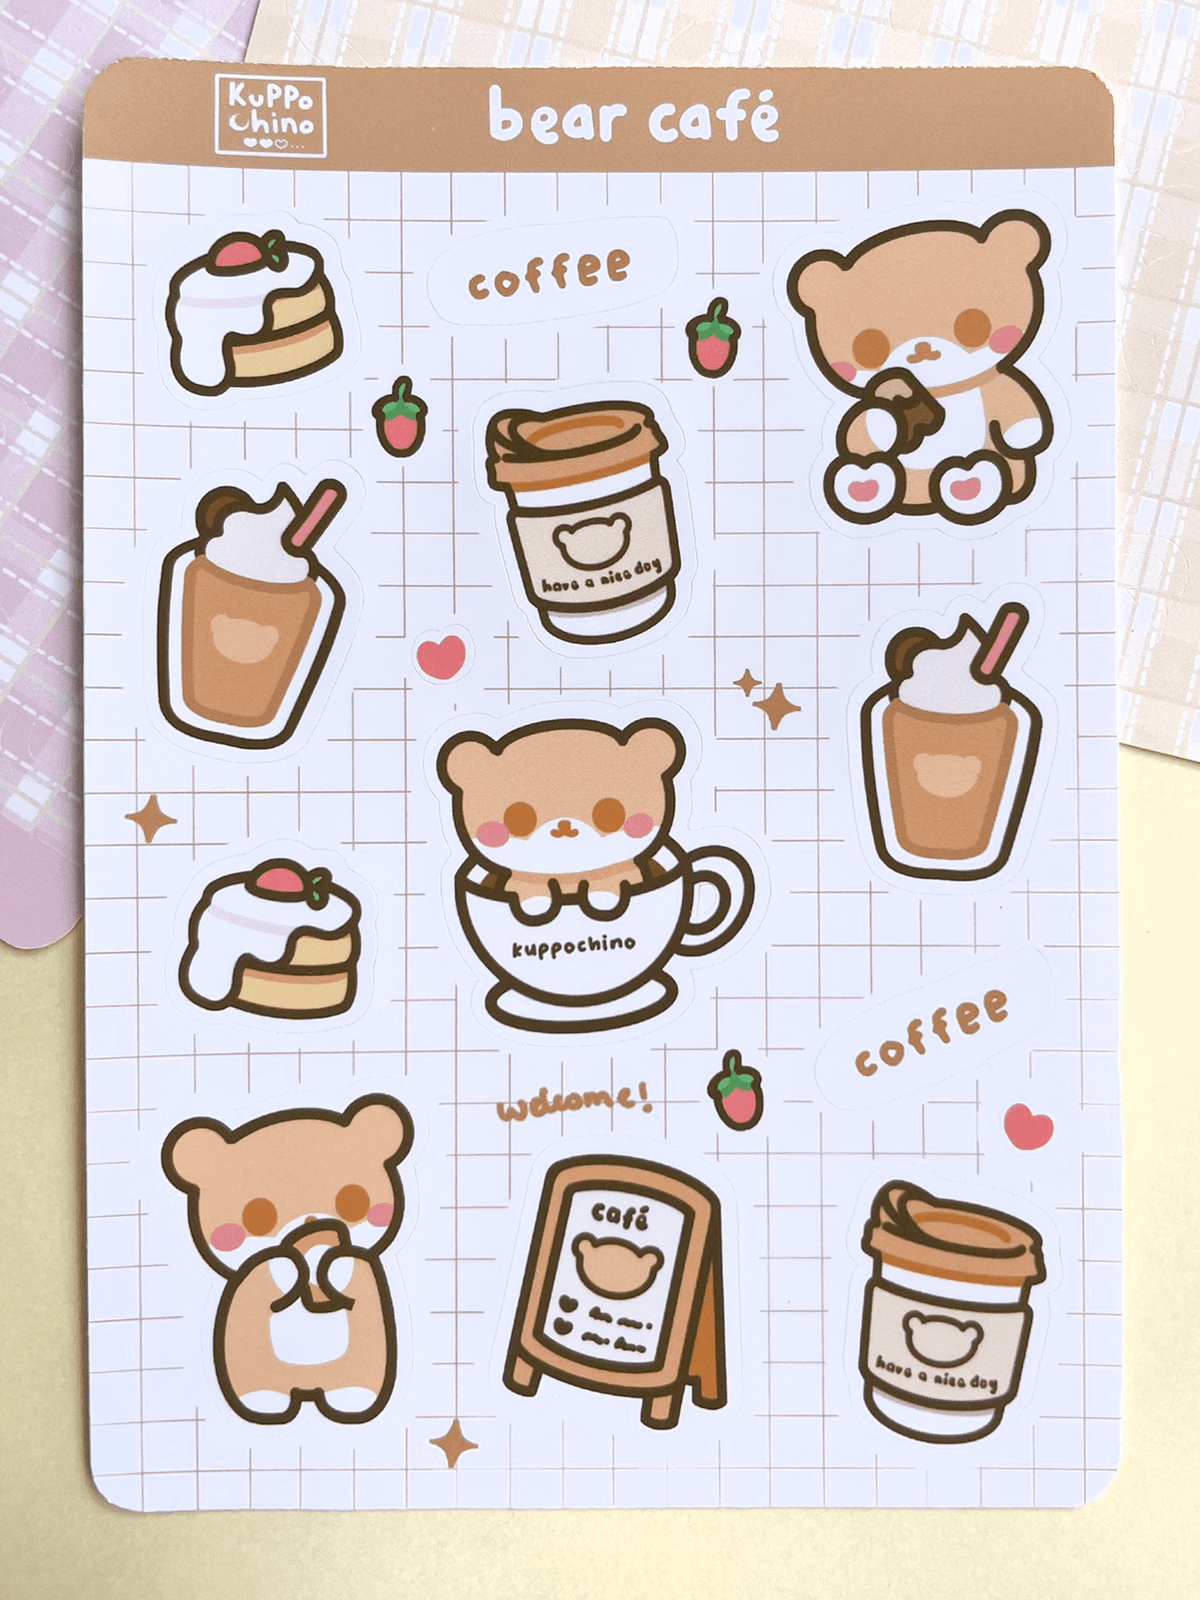 Kuppochino Cafe Bear Cafe Sticker Sheet